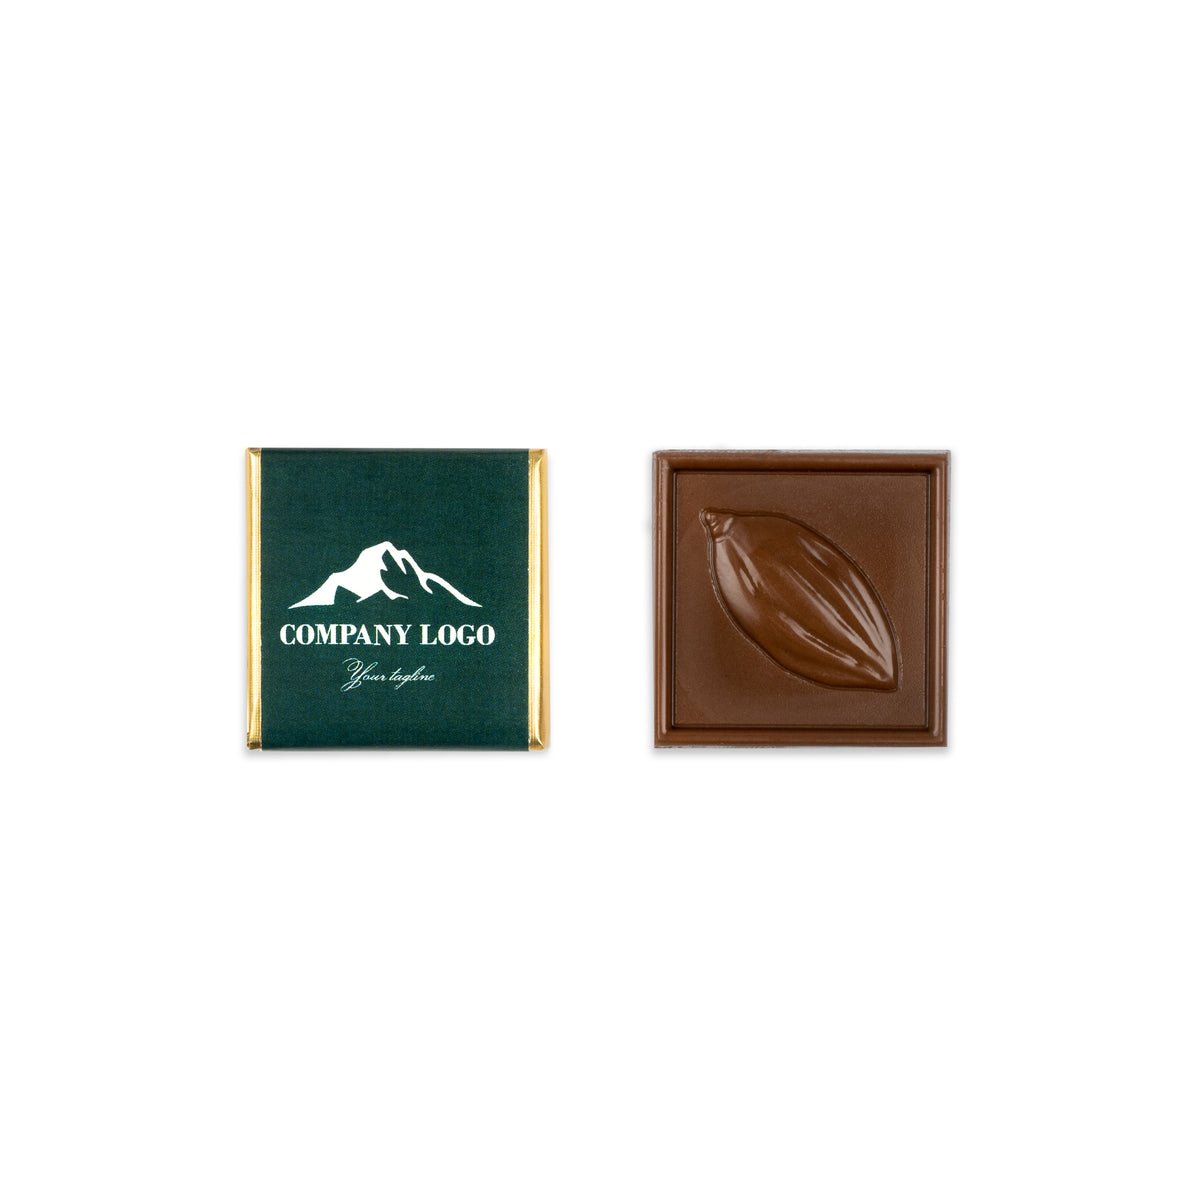 Customized envelope of 8 chocolate squares